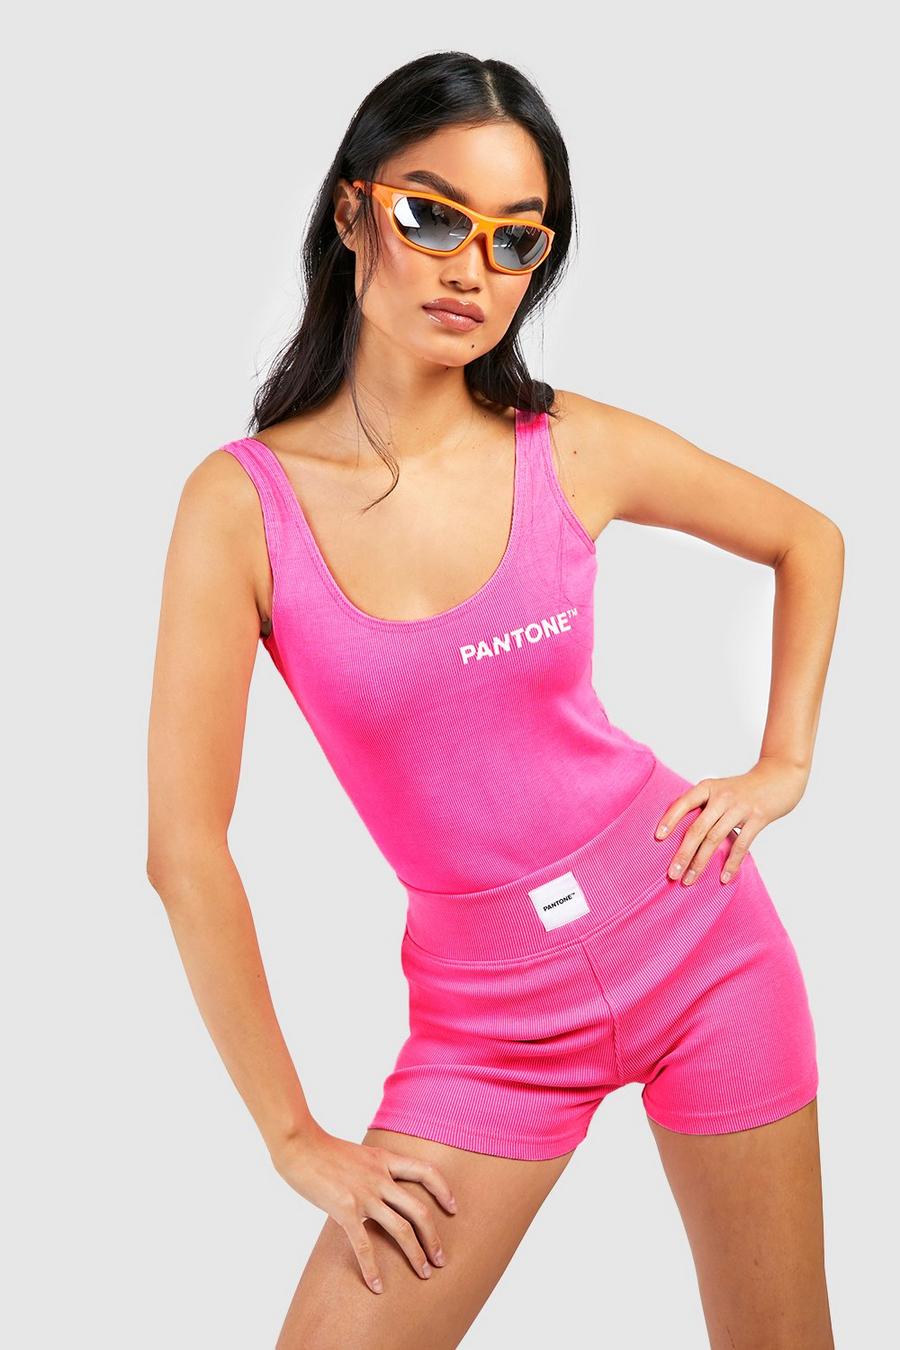 Pantone gerippte Booty-Shorts, Neon-pink